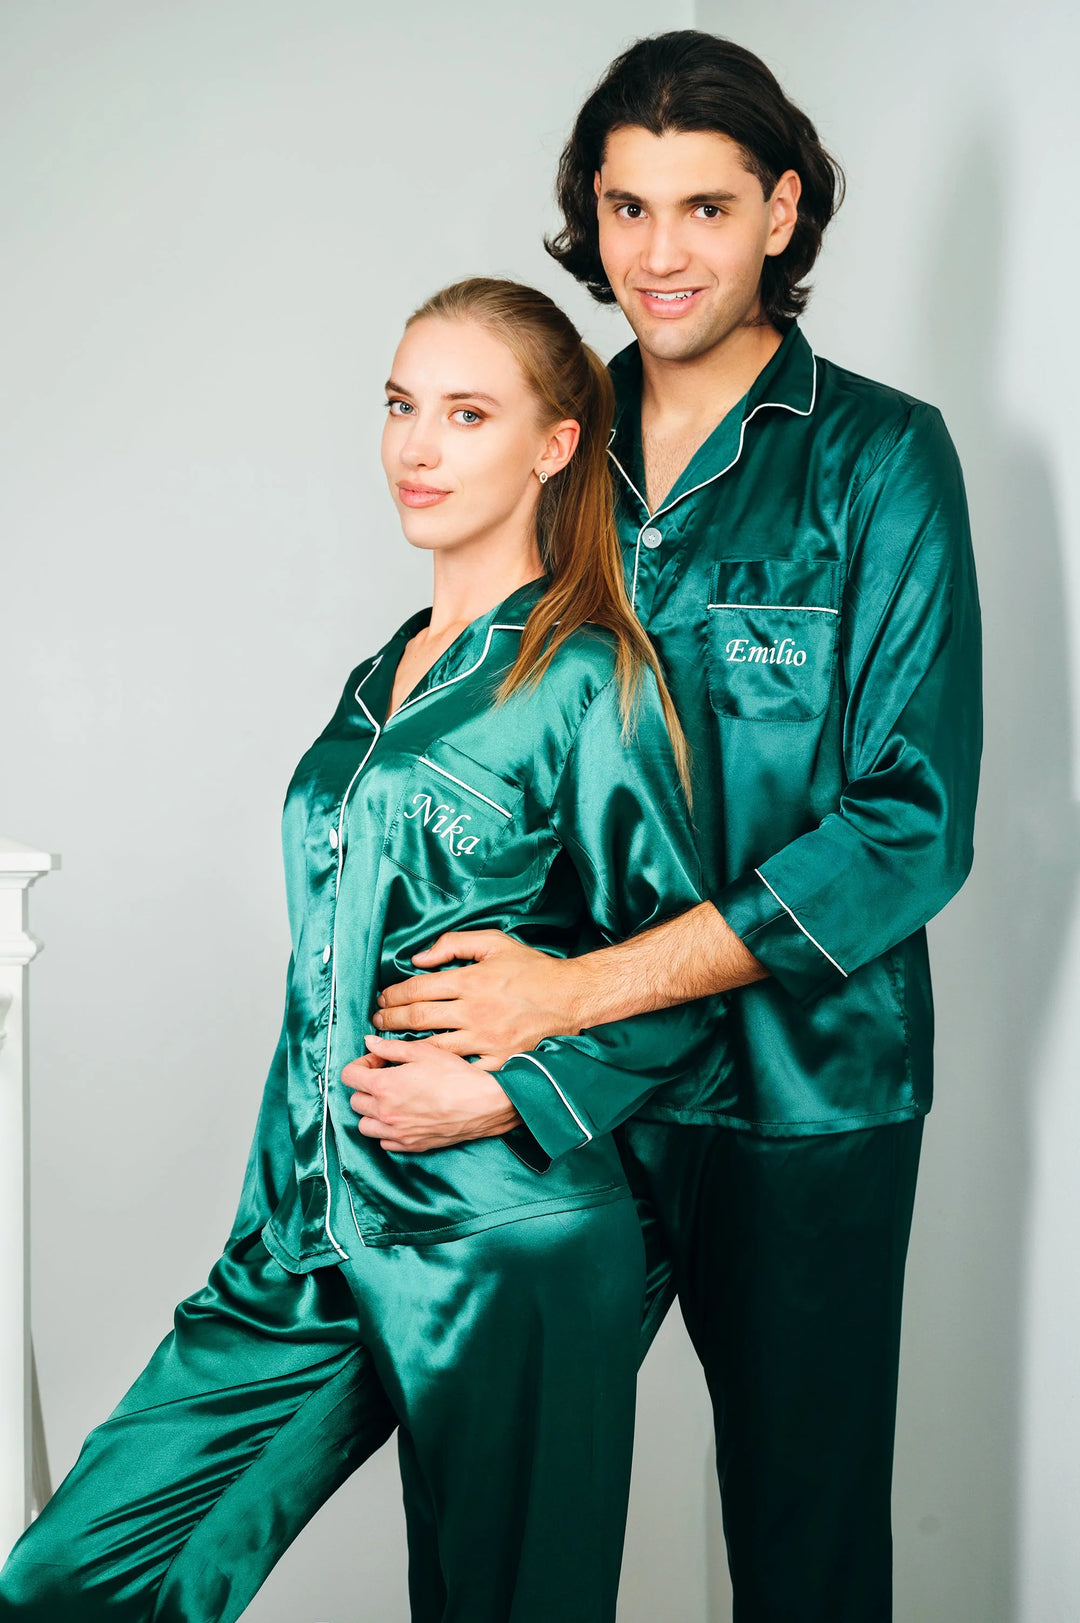 Satin Pajama Sets for Couple Long Sleeves + Pants